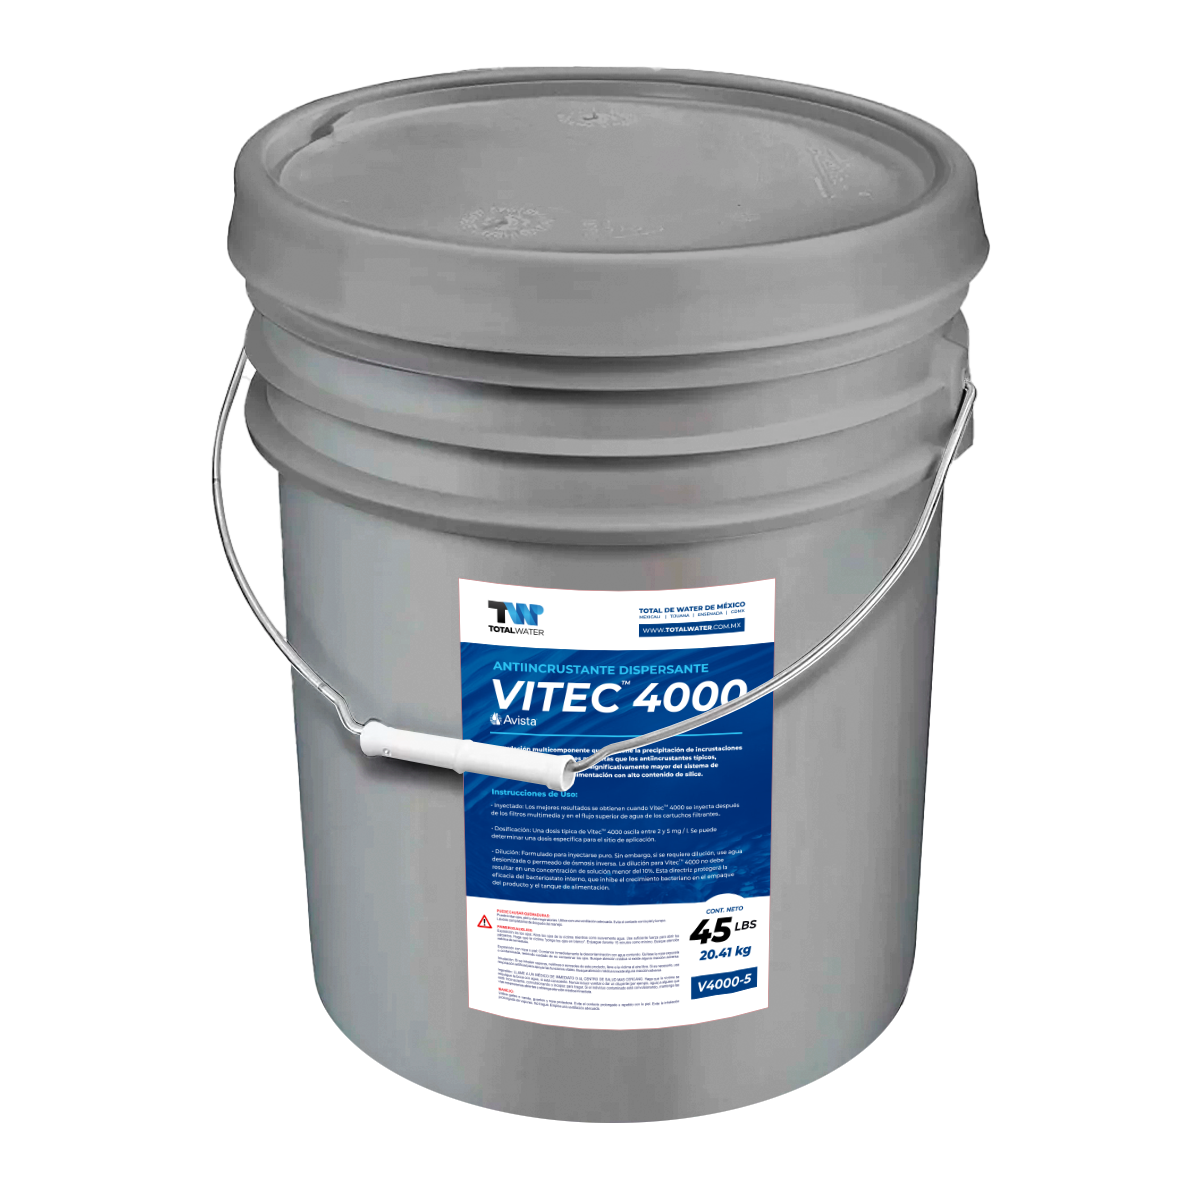 Anti-incrustante Dispersante - Vitec 4000 - 45 lbs (20.41 kg) - AVISTA